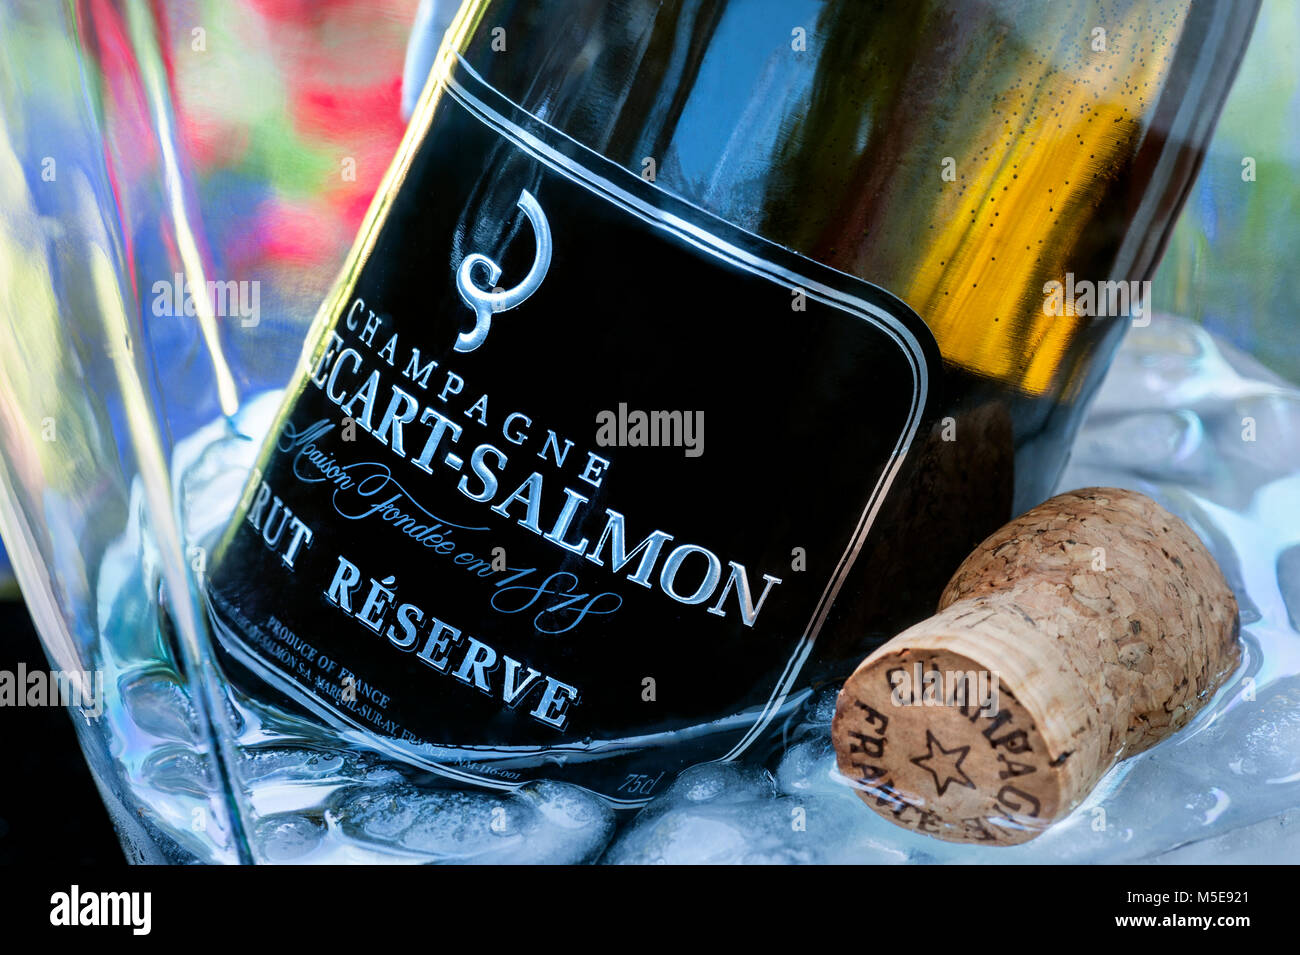 Billecart-Salmon Brut etiqueta de botella de champán en hielo escalofriante en cristal de lujo enfriador de vino en la terraza jardín situación Foto de stock